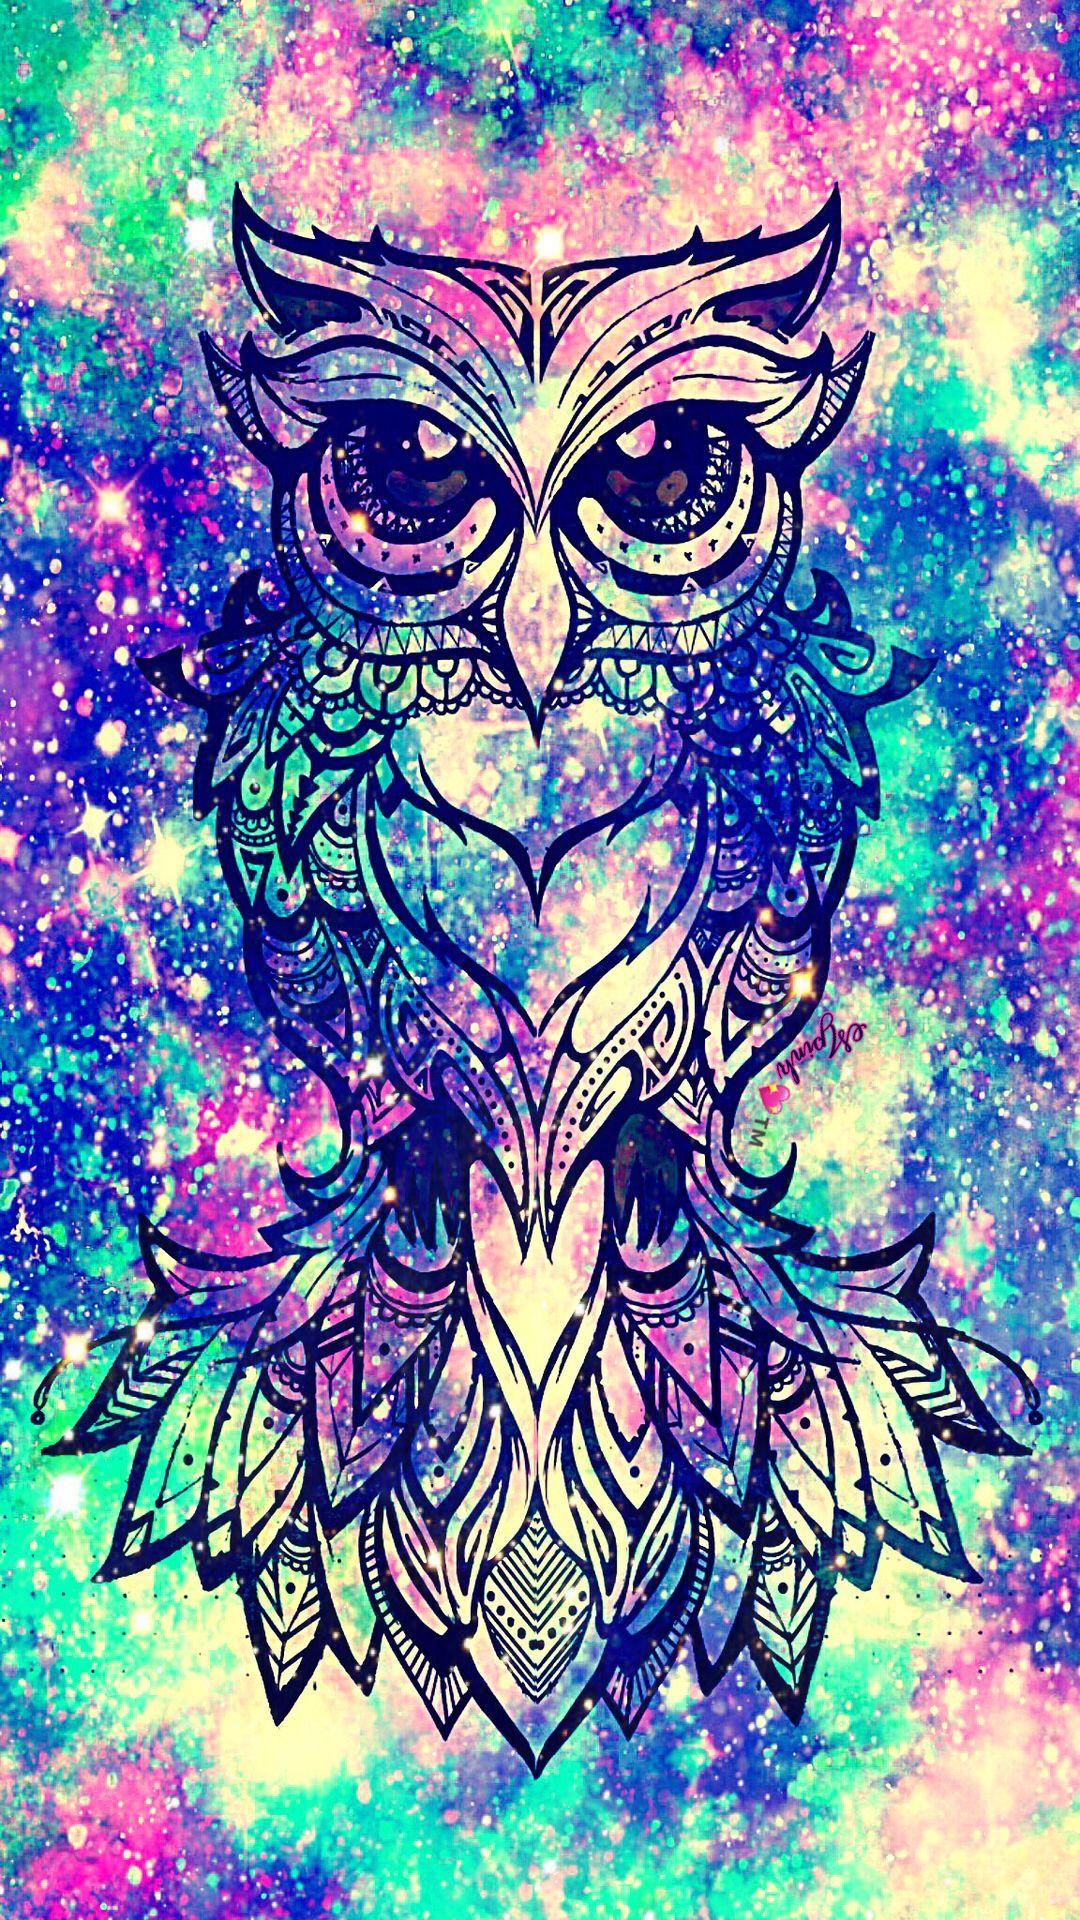 1080x1920 Pretty Owl Galaxy Wallpaper #androidwallpaper #iphonewallpaper #w...